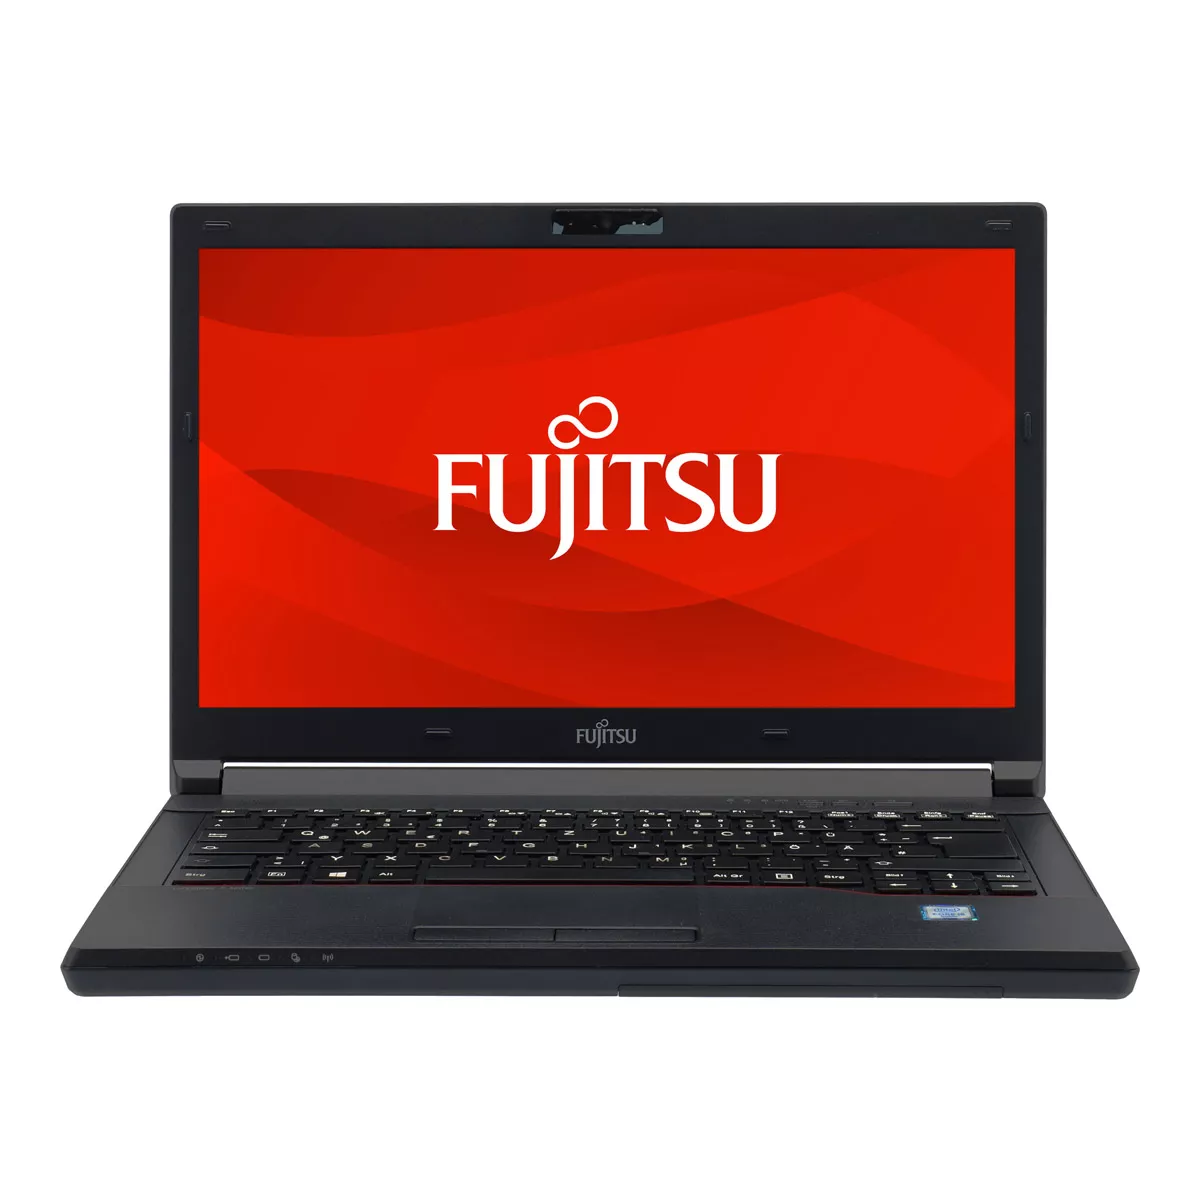 Fujitsu Lifebook E554 Core i5 4210M 2,60 GHz 256 GB SSD Webcam